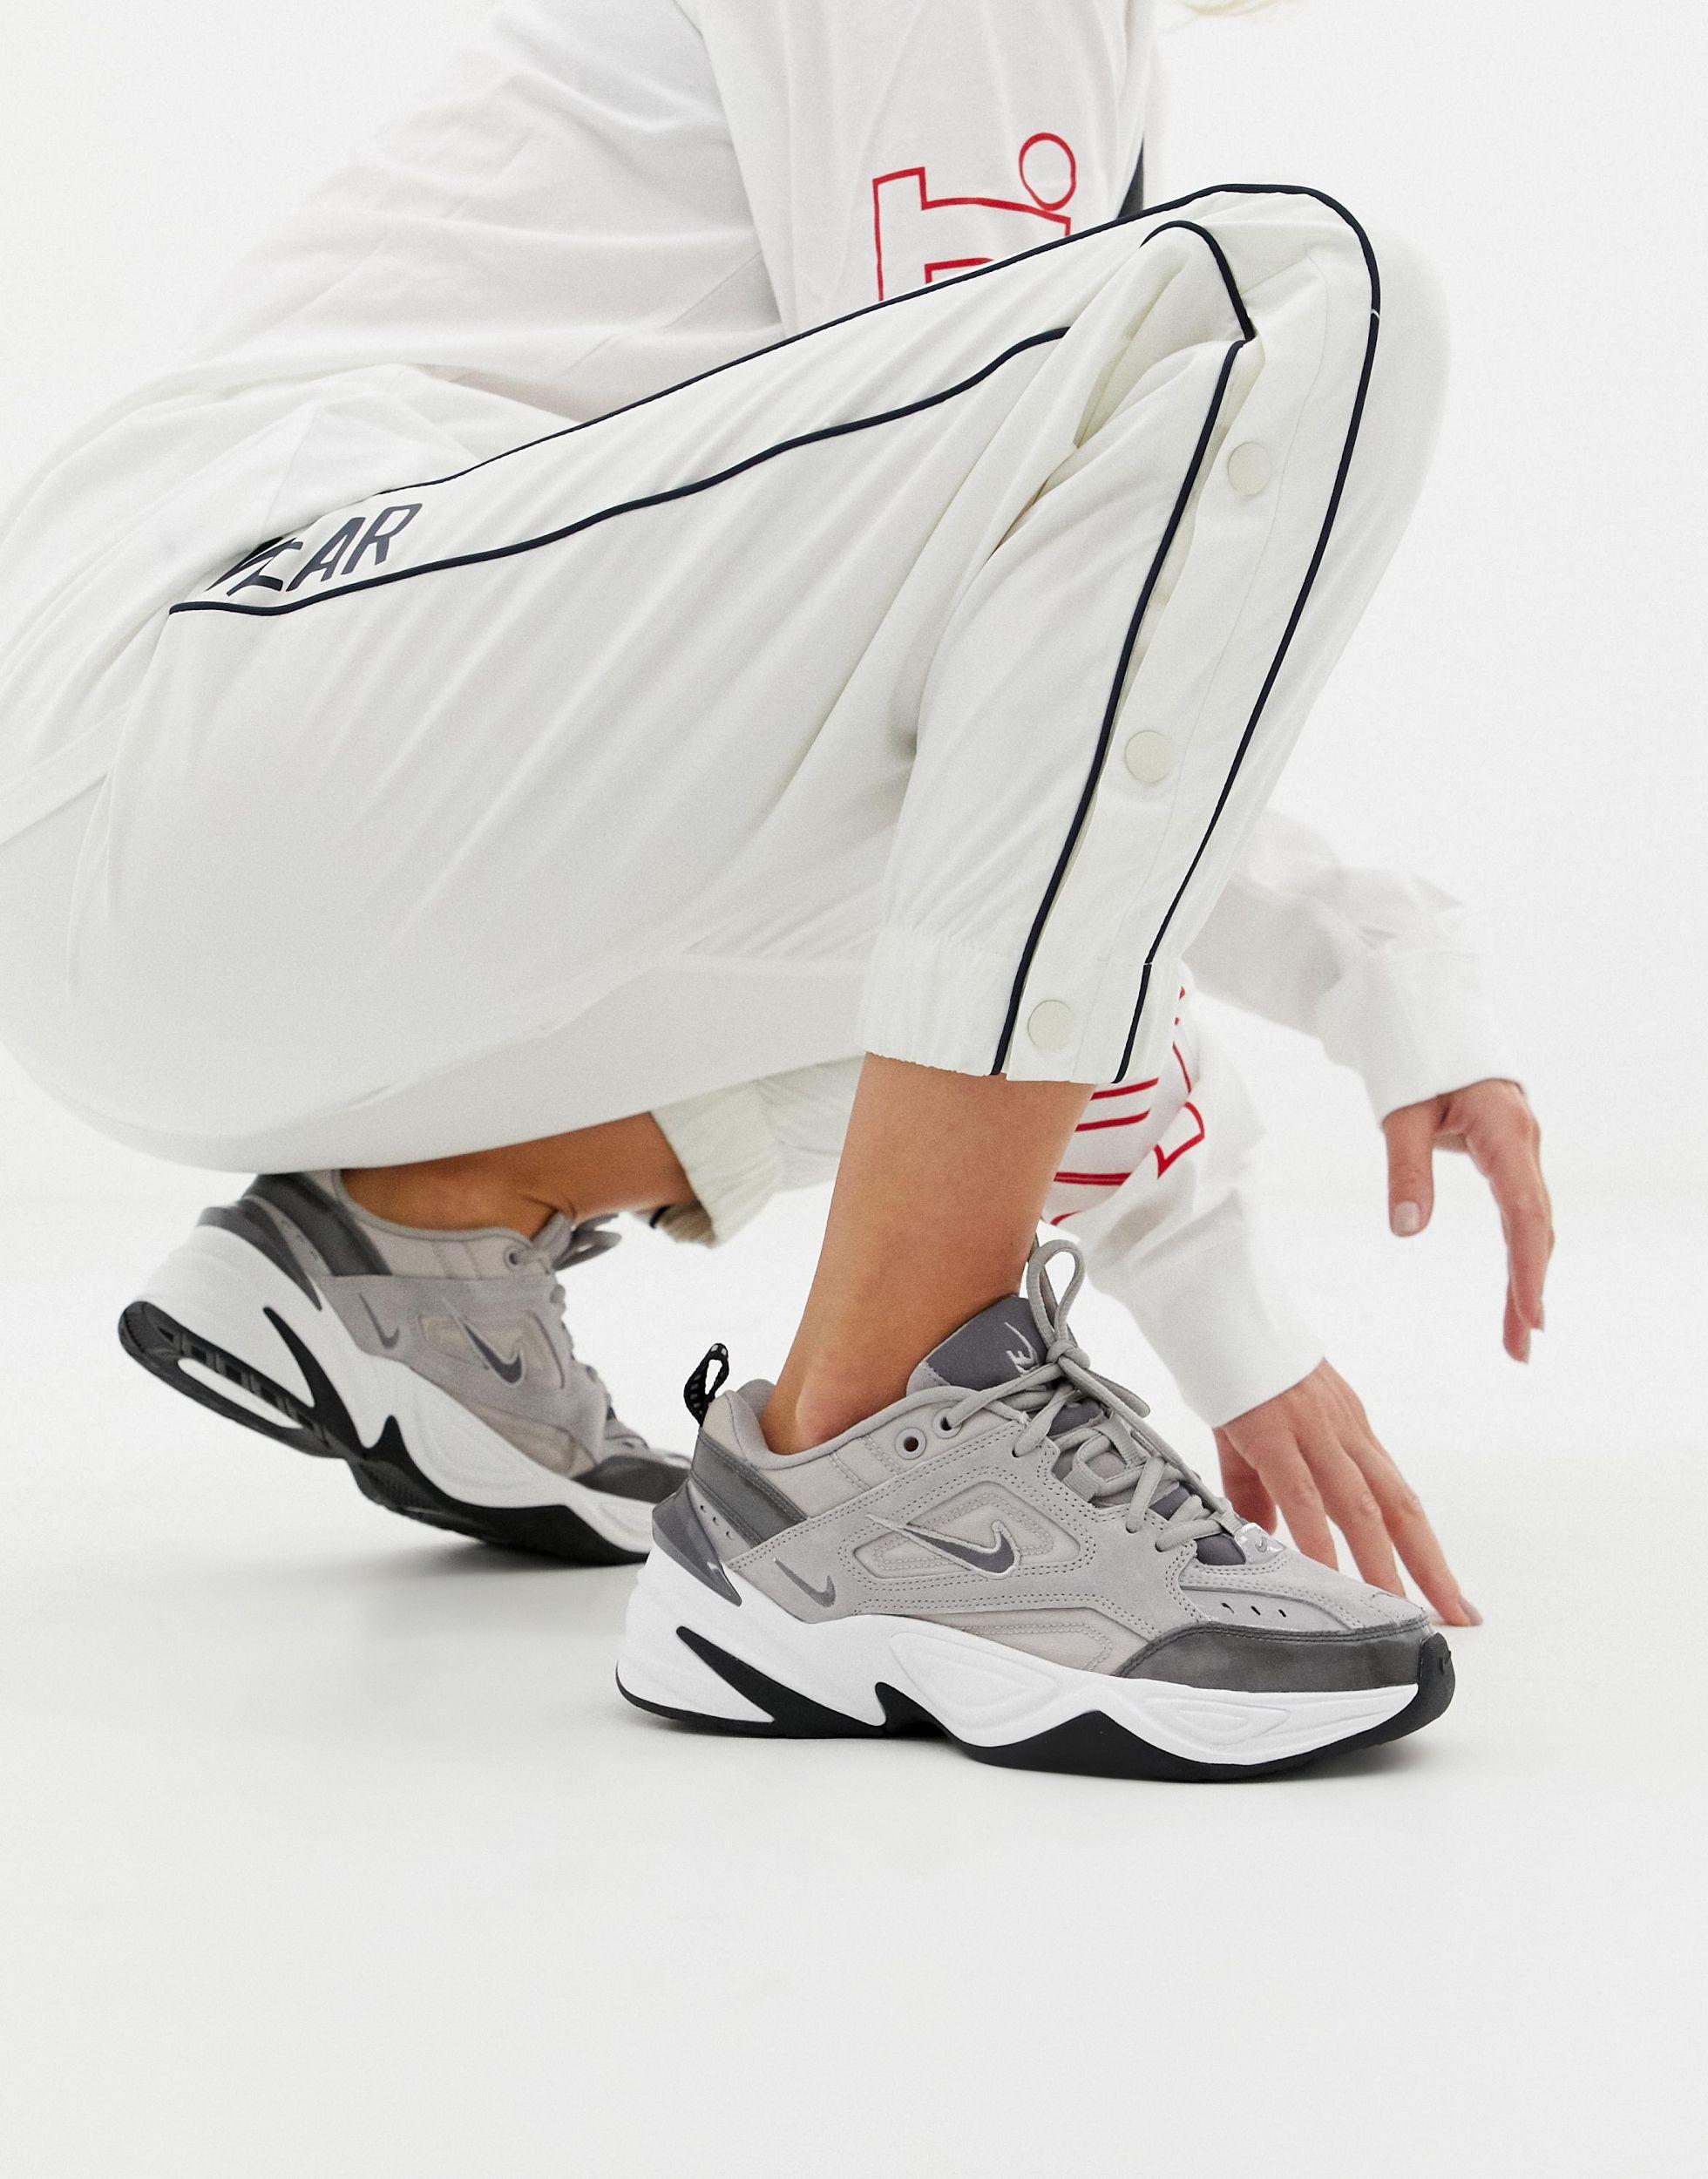 Nike Rubber Grey M2k Tekno Sneakers in Grey - Lyst